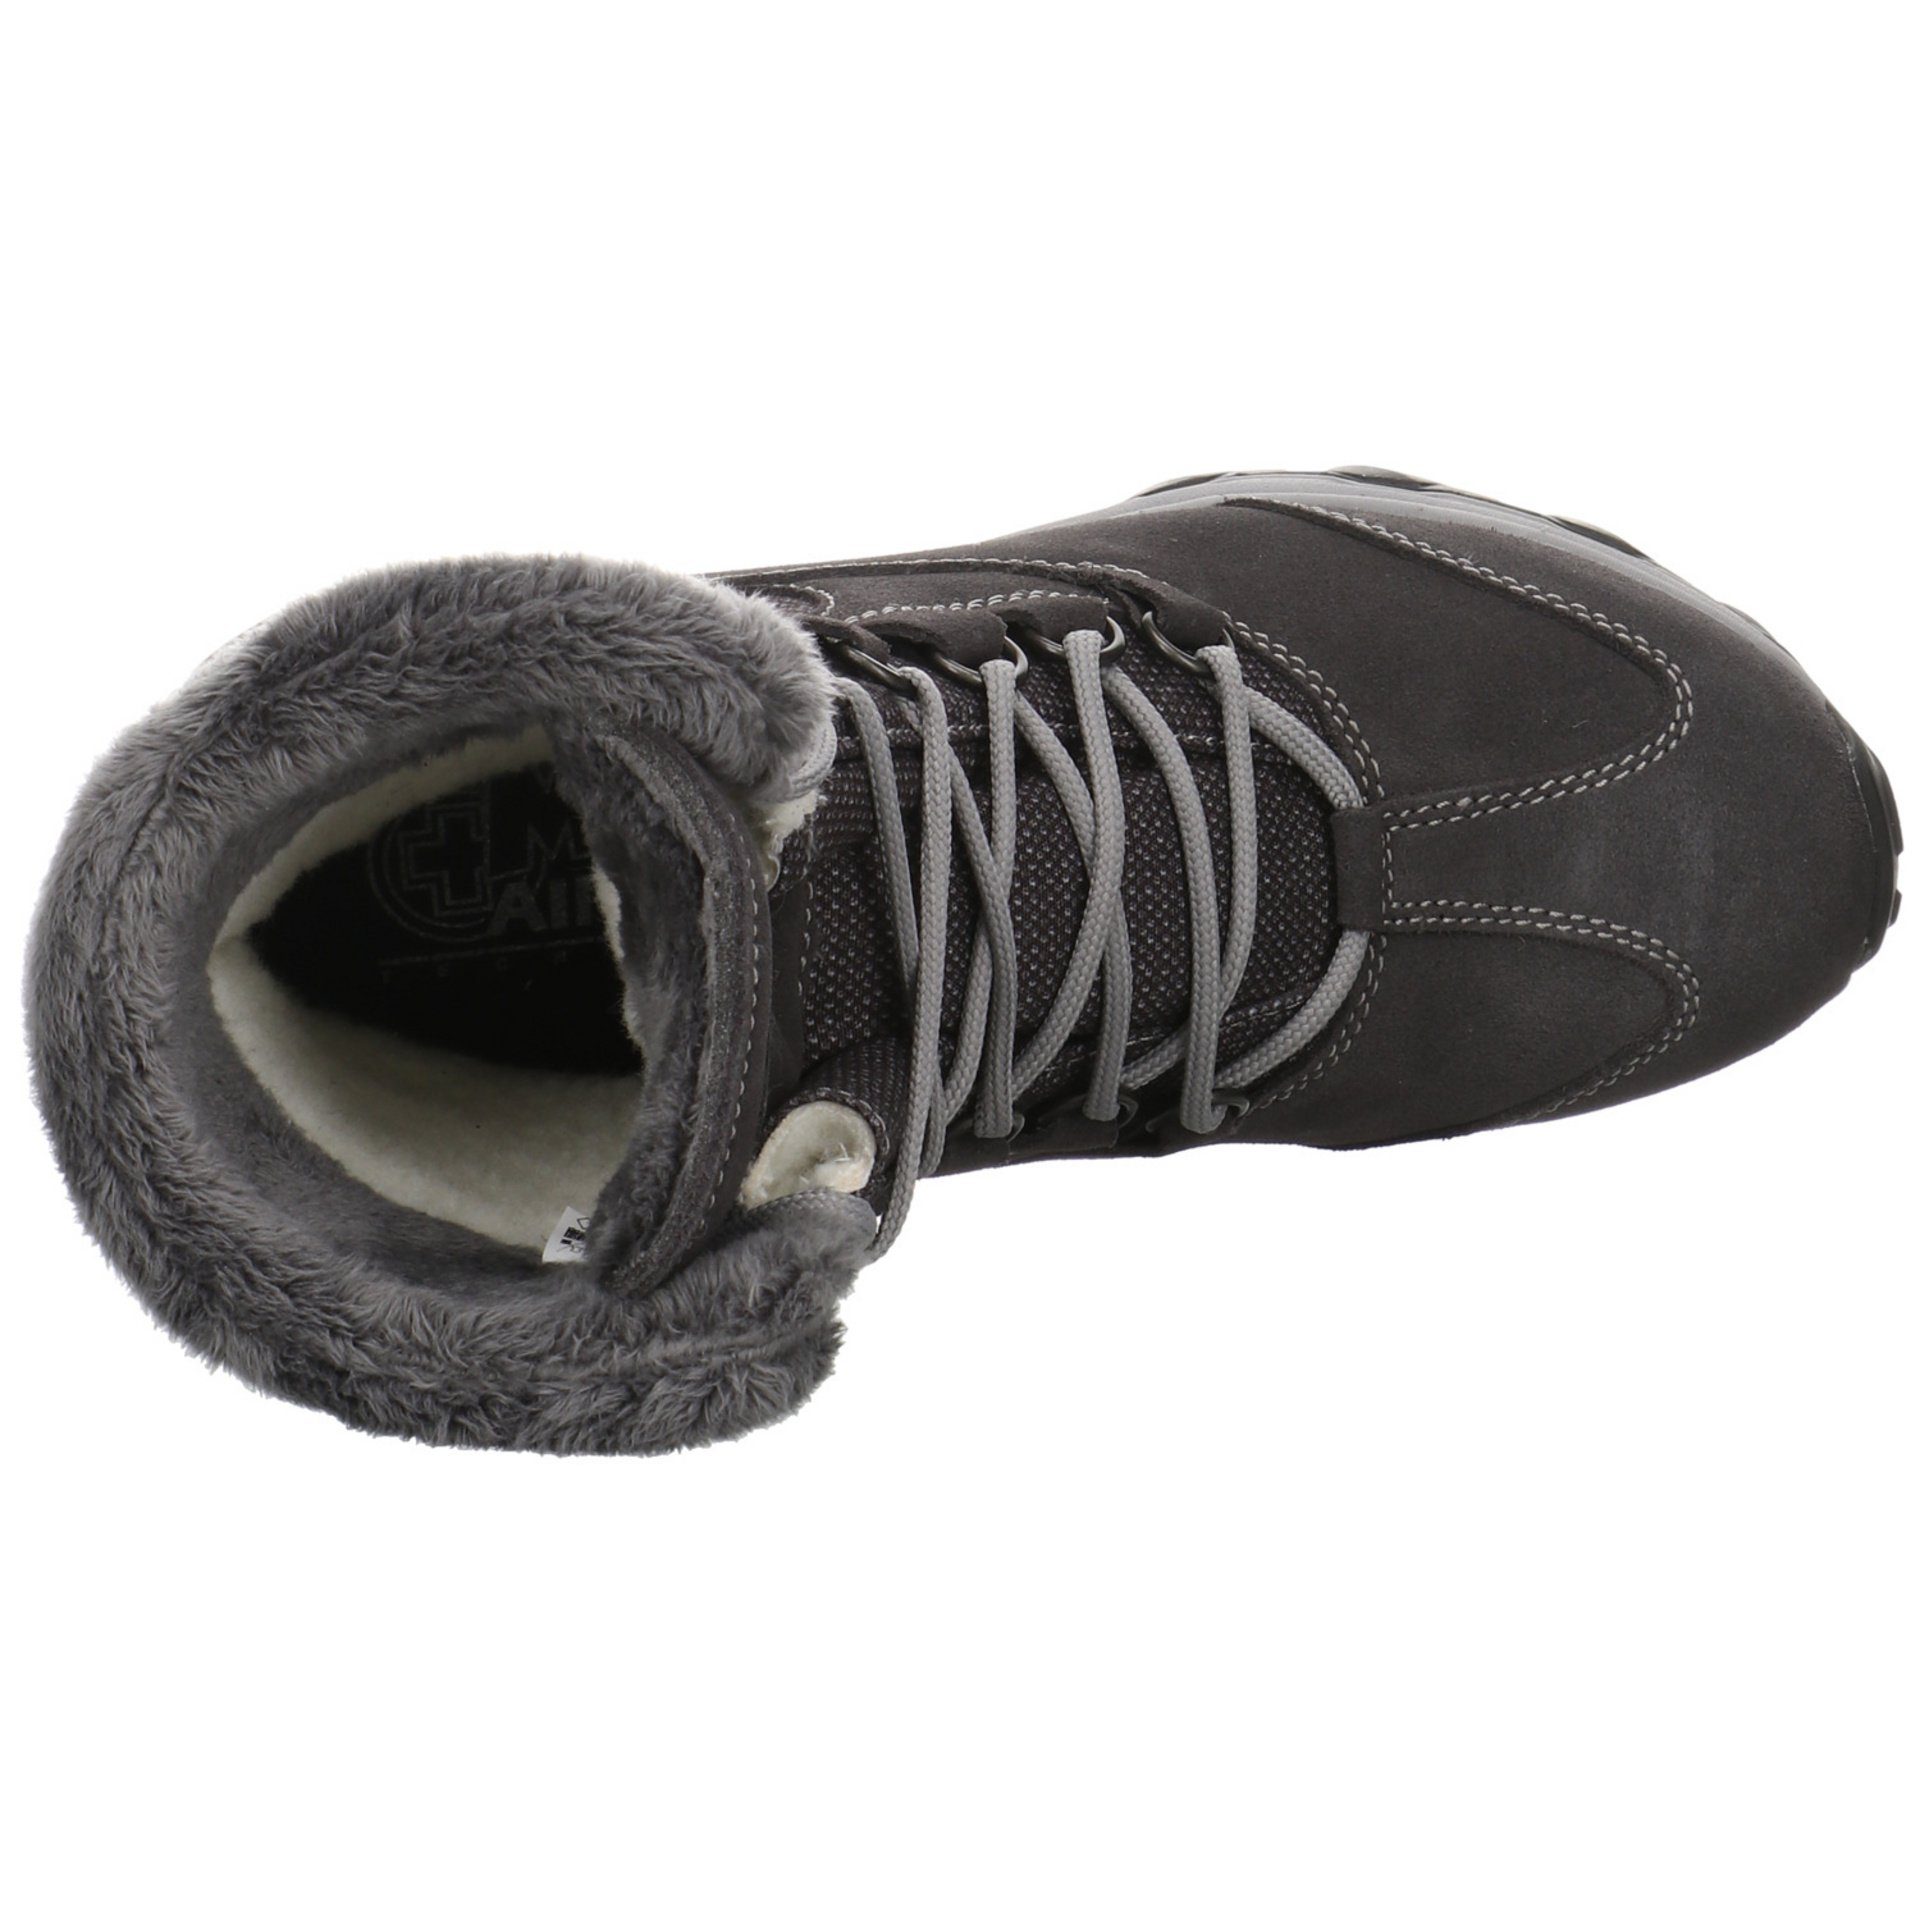 Civetta Snowboots Leder-/Textilkombination Meindl Boots Leder-/Textilkombination Lady GTX graphit/türkis